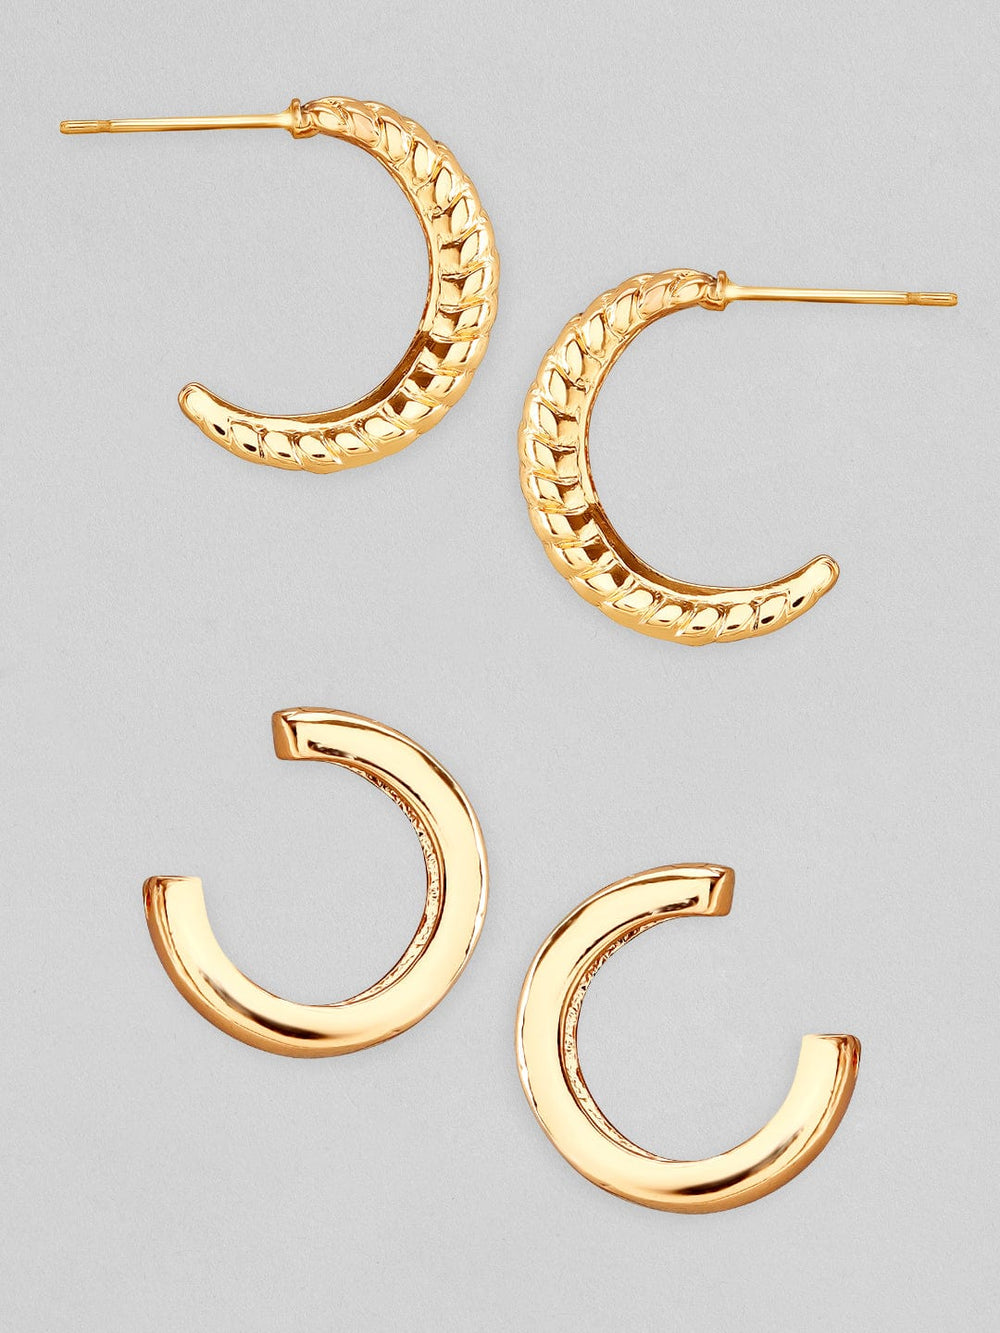 Rubans Voguish Set Of 3 Gold Toned Pearl Studded Classy Hoop Earrings. Earrings